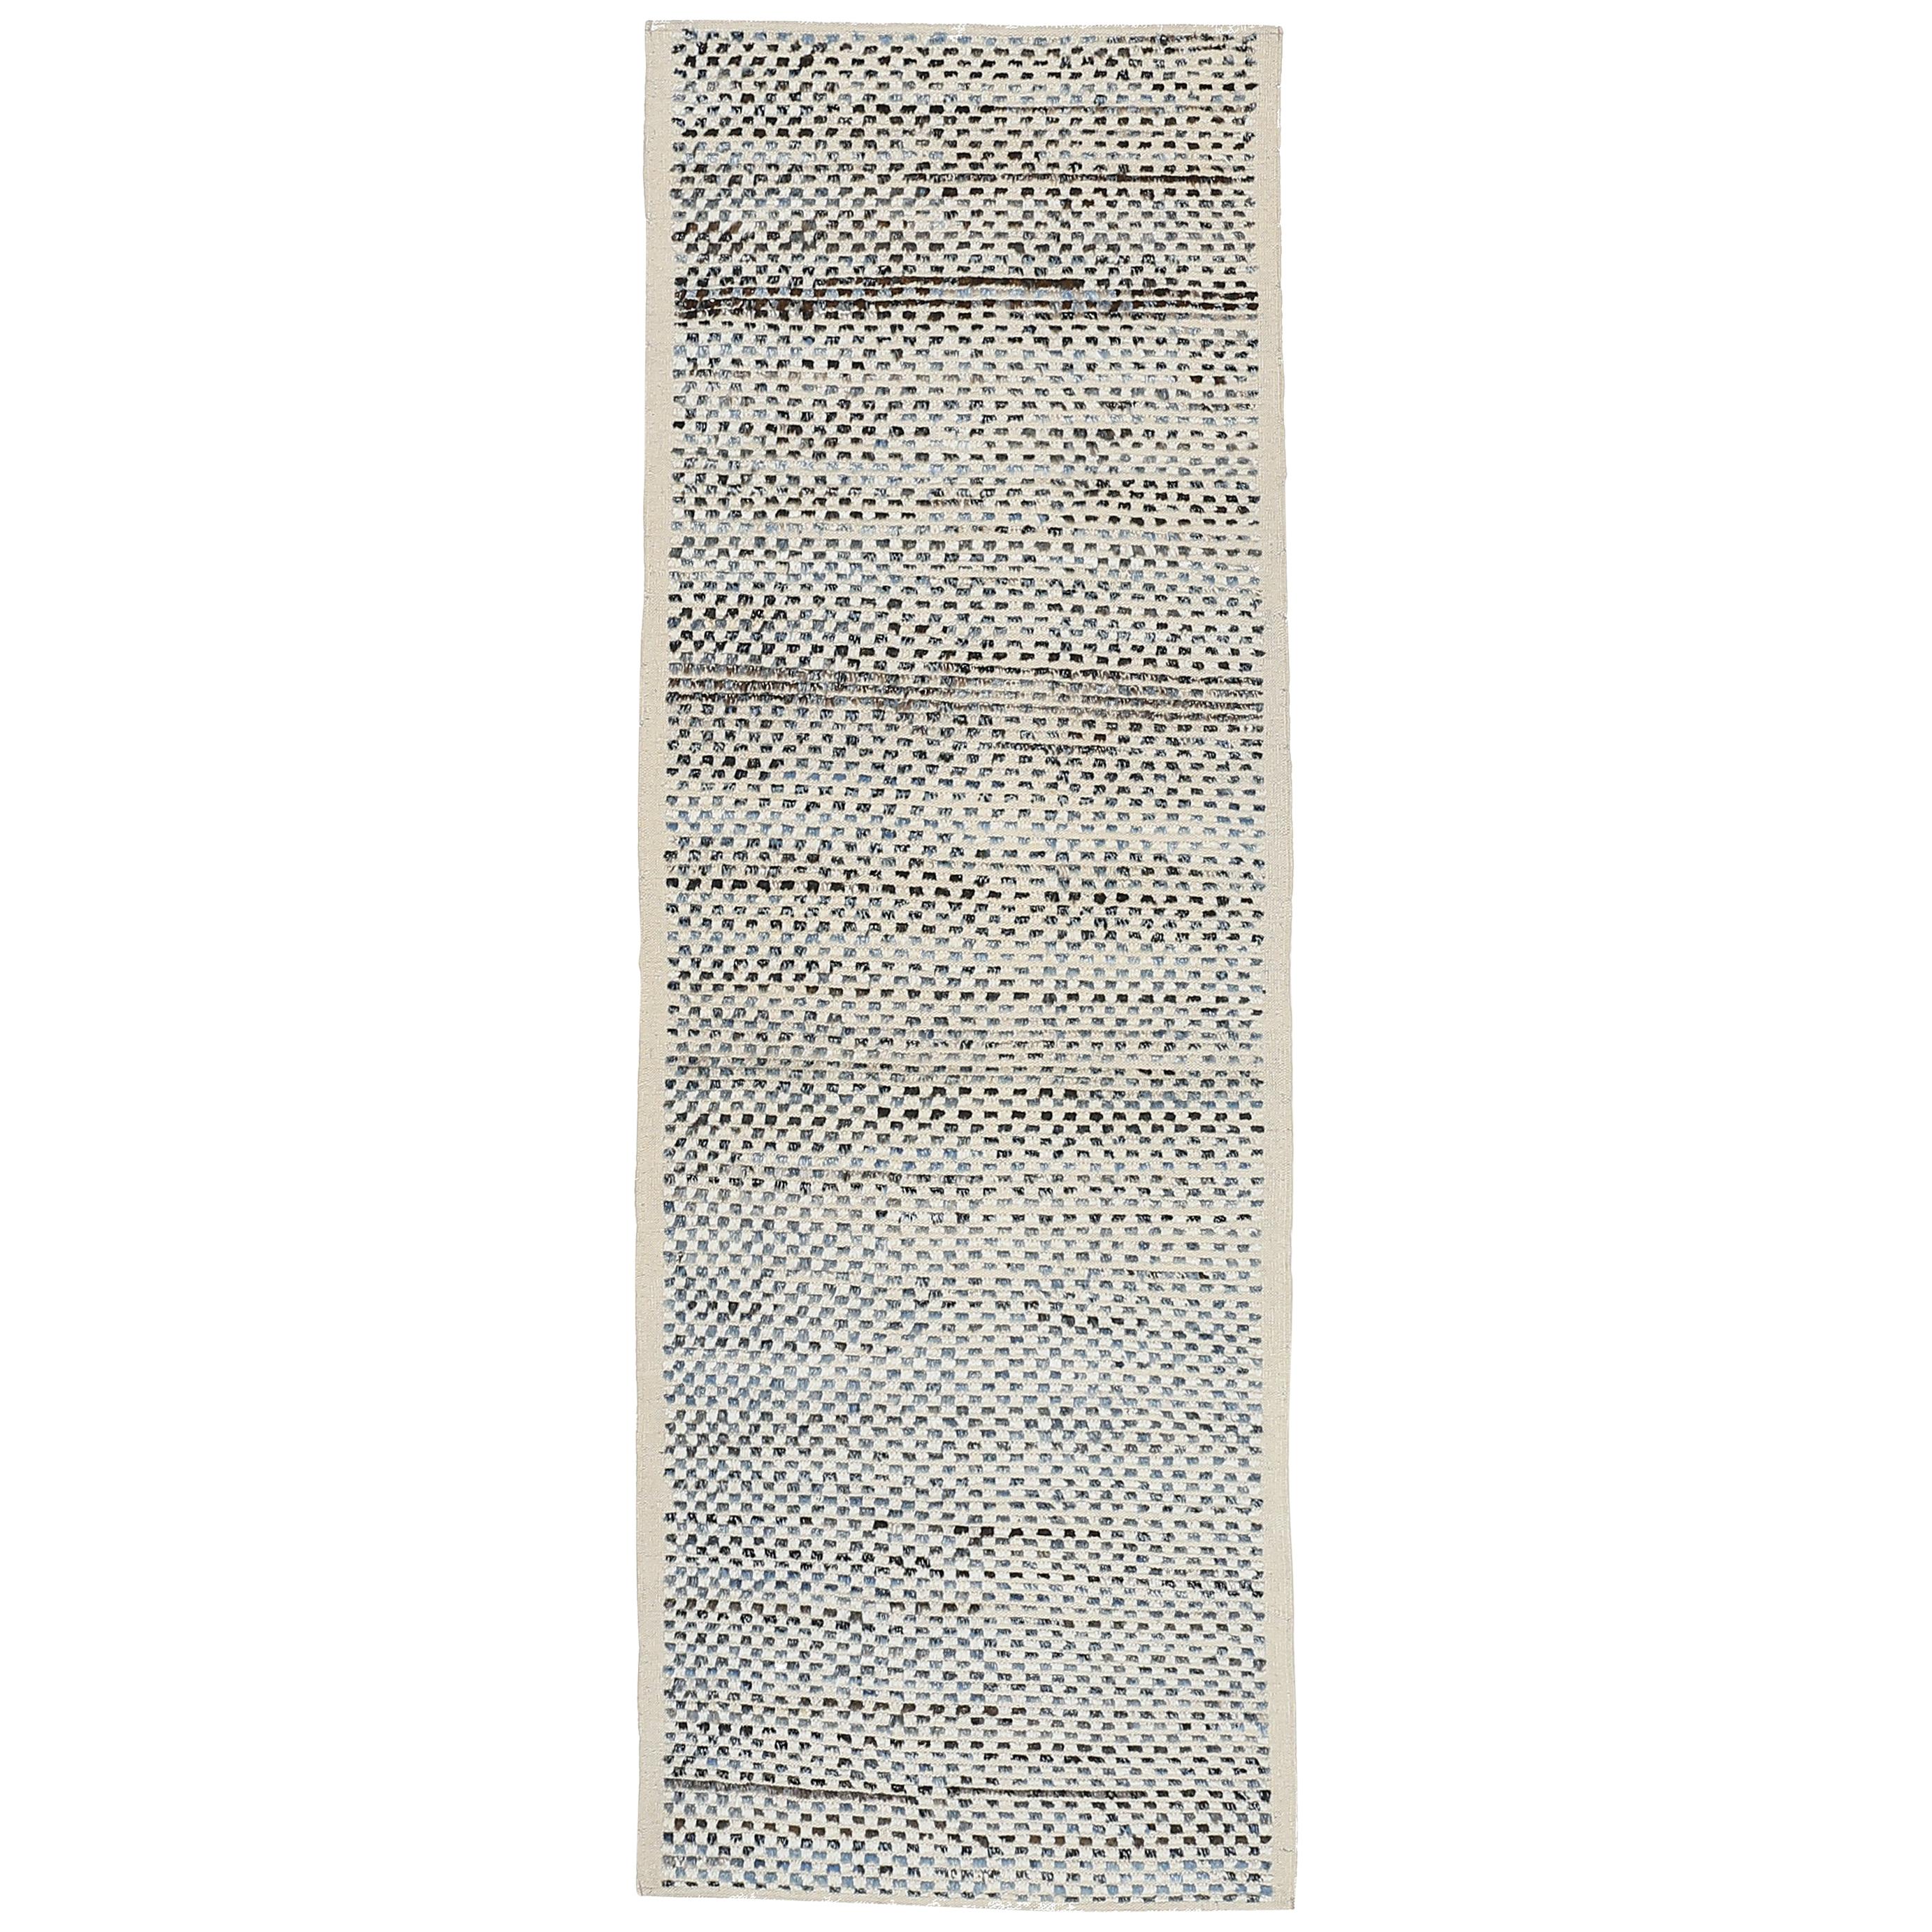 Modernist Design Textured Ivory and Blue Runner Rug in Scandinavian/Berber Style